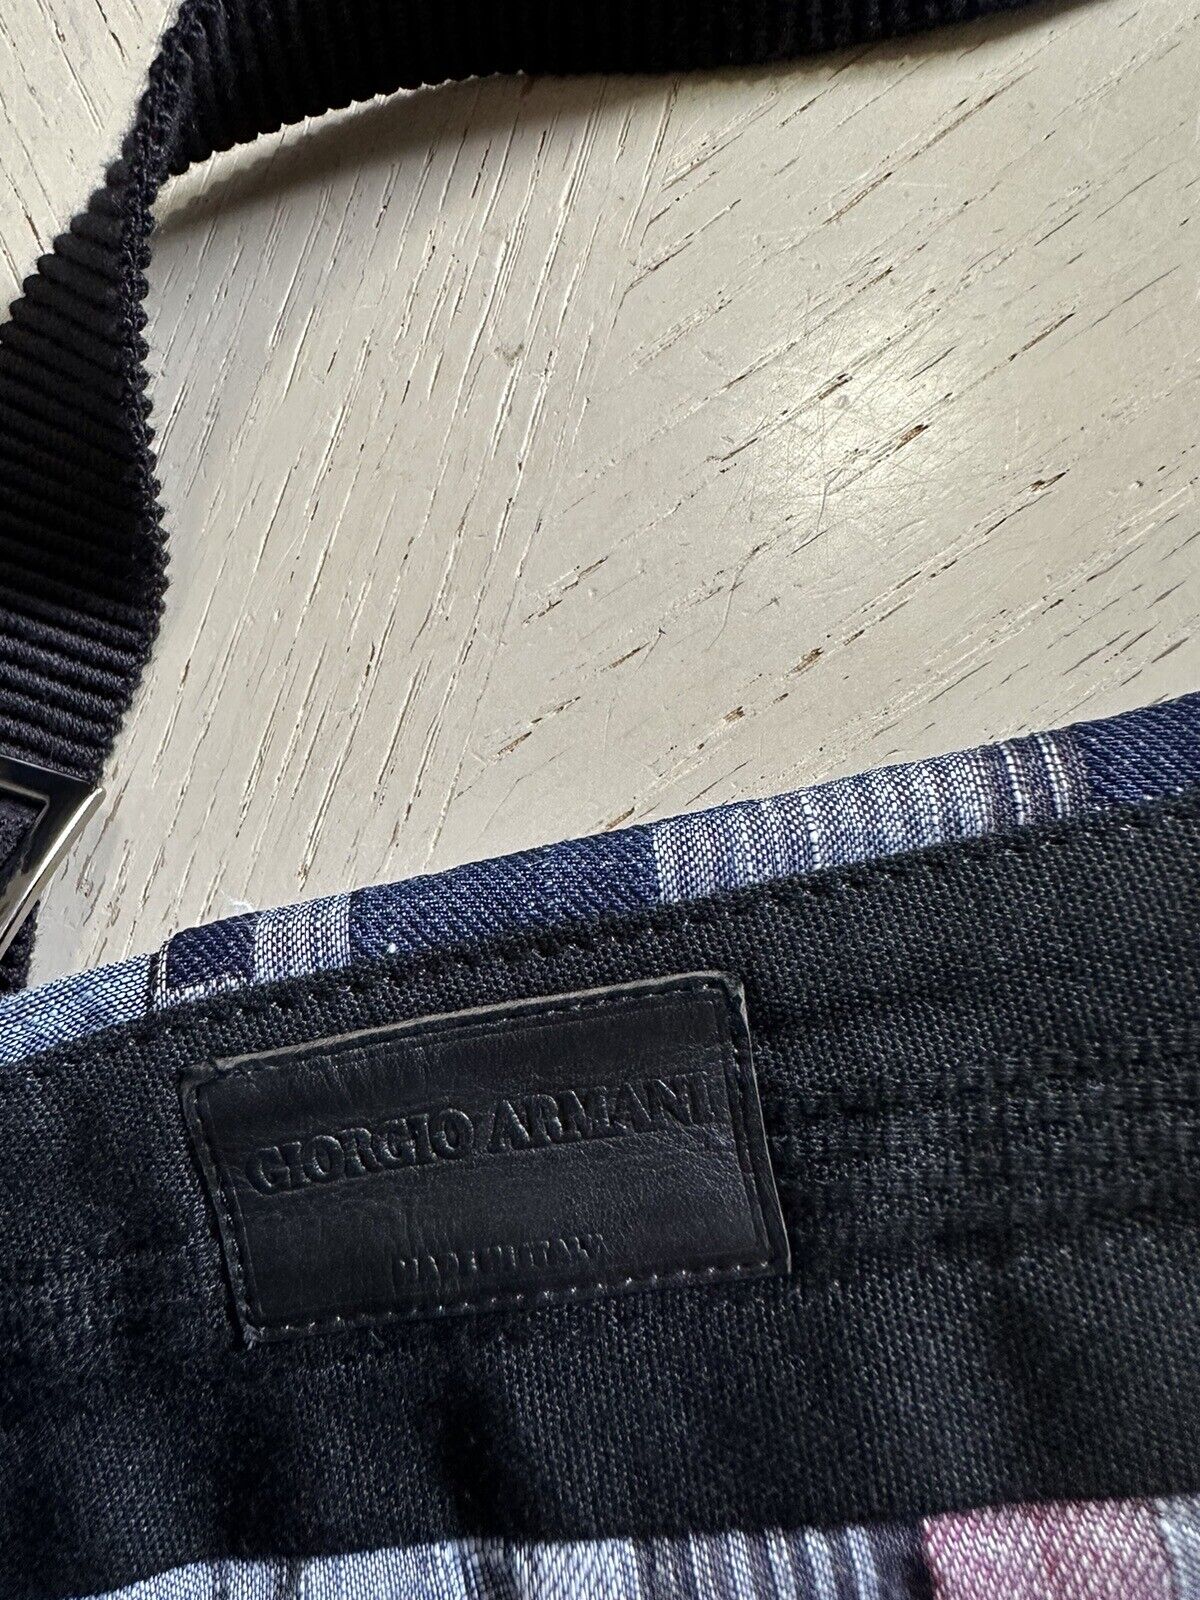 New $4090 Giorgio Armani Men Jacket/Shirt Pants Sets Multi 40 US/50 Eu